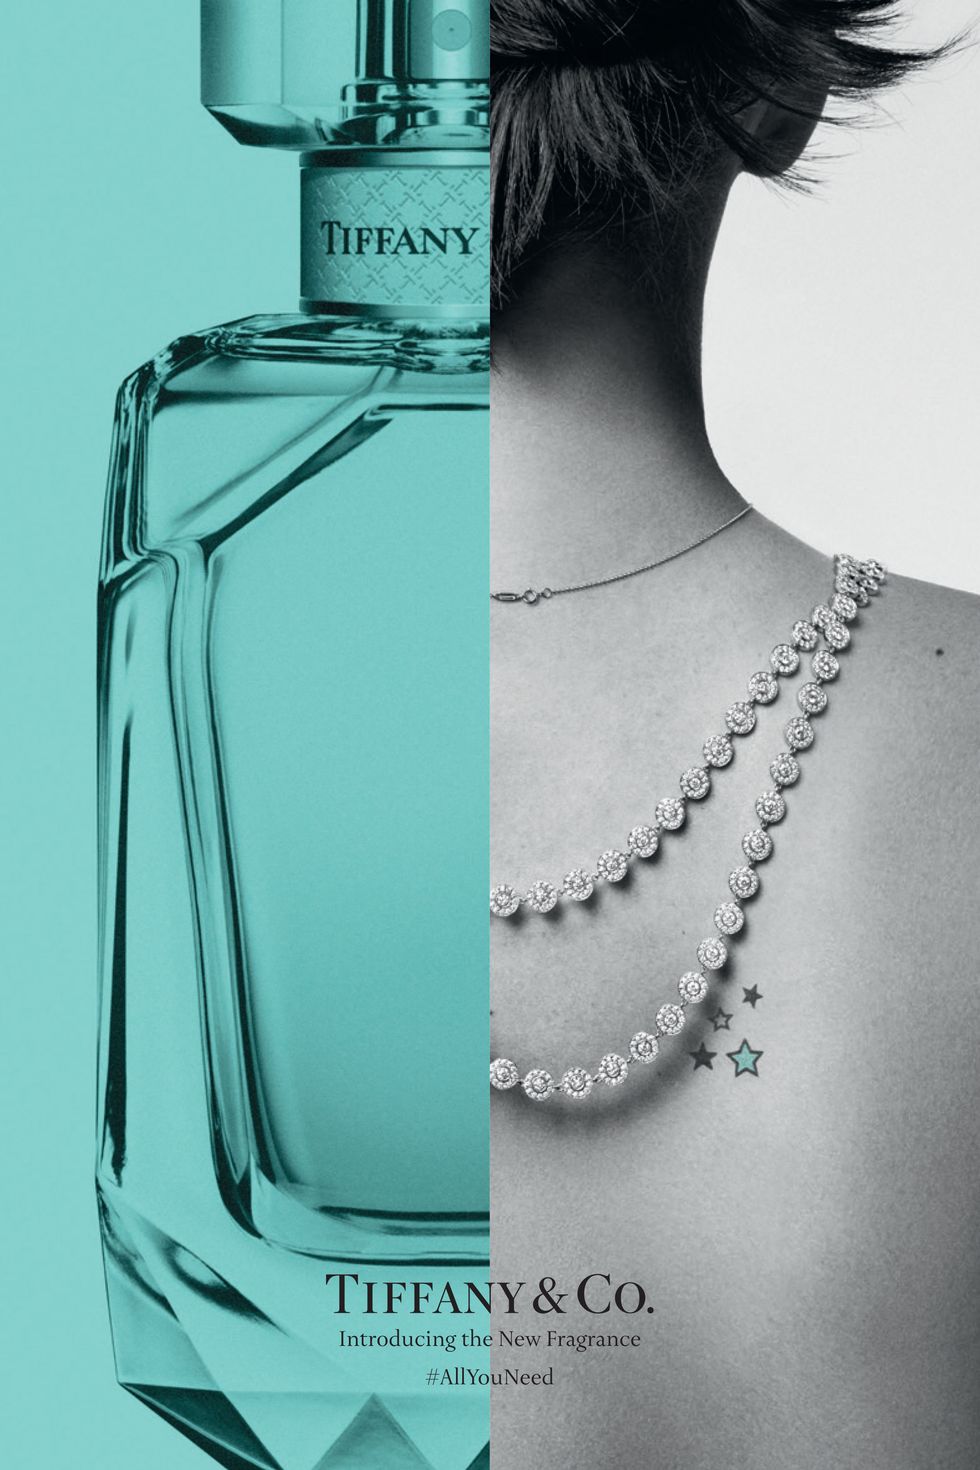 Tiffany campaign image